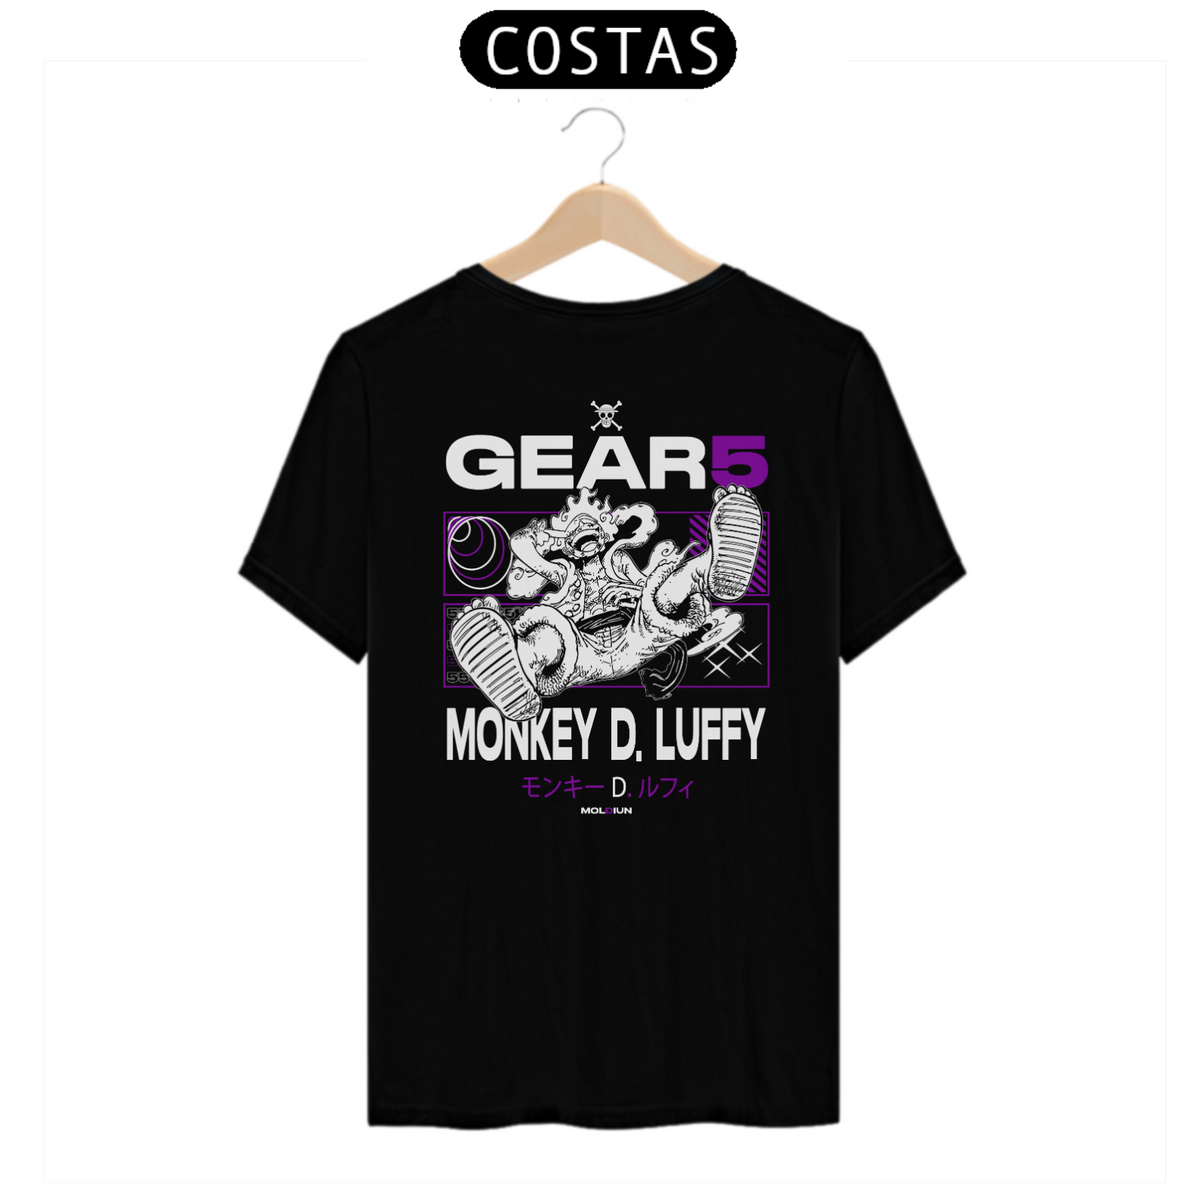 Nome do produto: Monkey D. Luffy - One piece (costas)